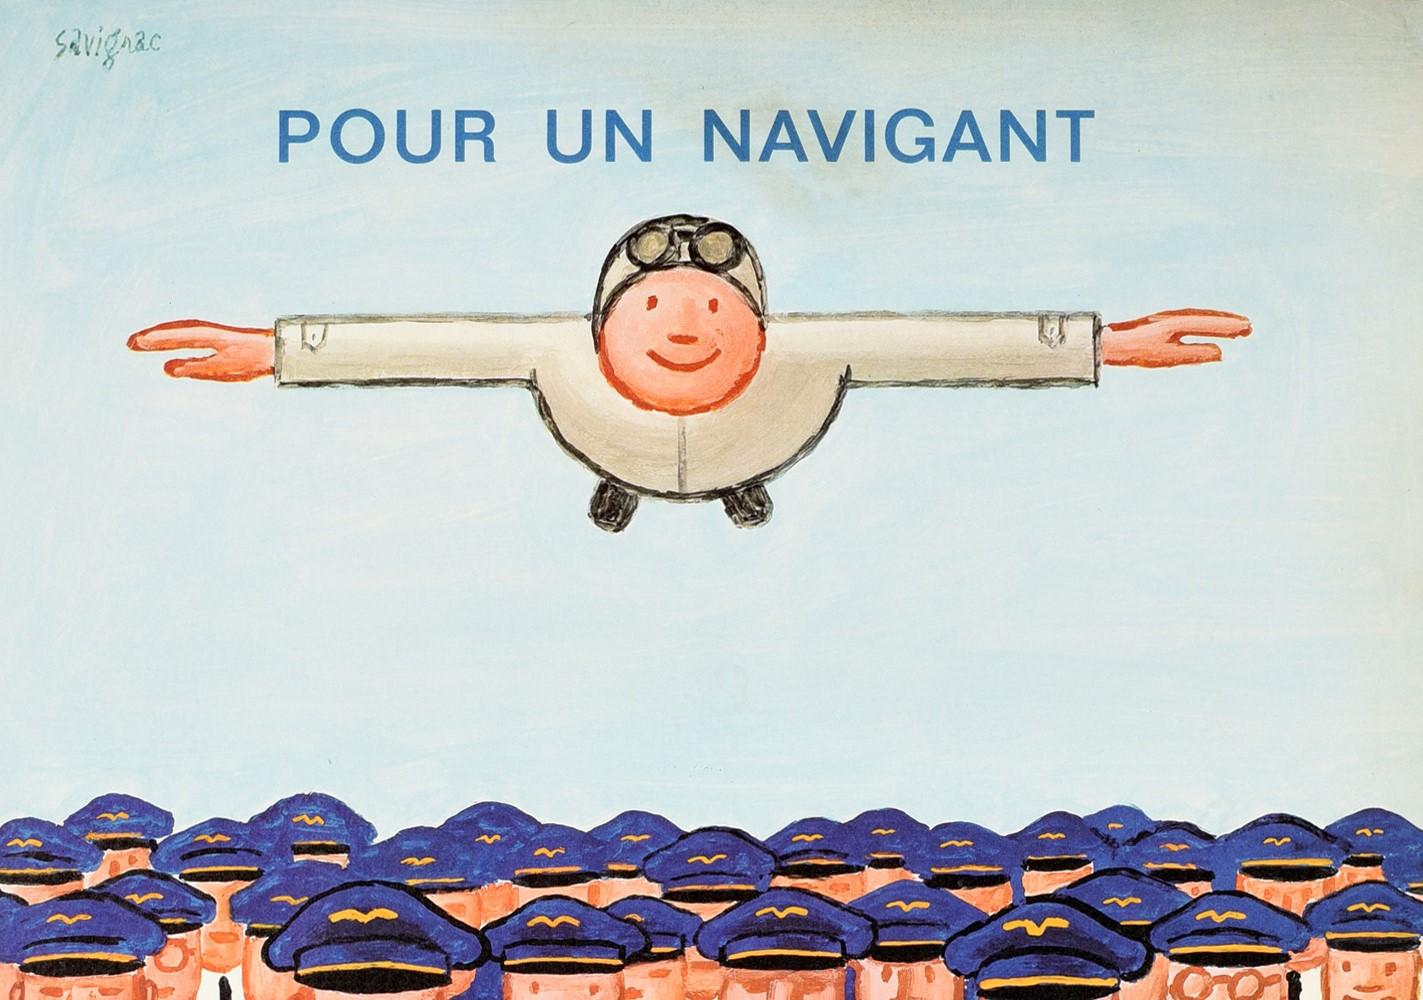 Original Vintage Poster Air Force Pilot Recruitment Armee De l'Air Flying Design - Print by Raymond Savignac